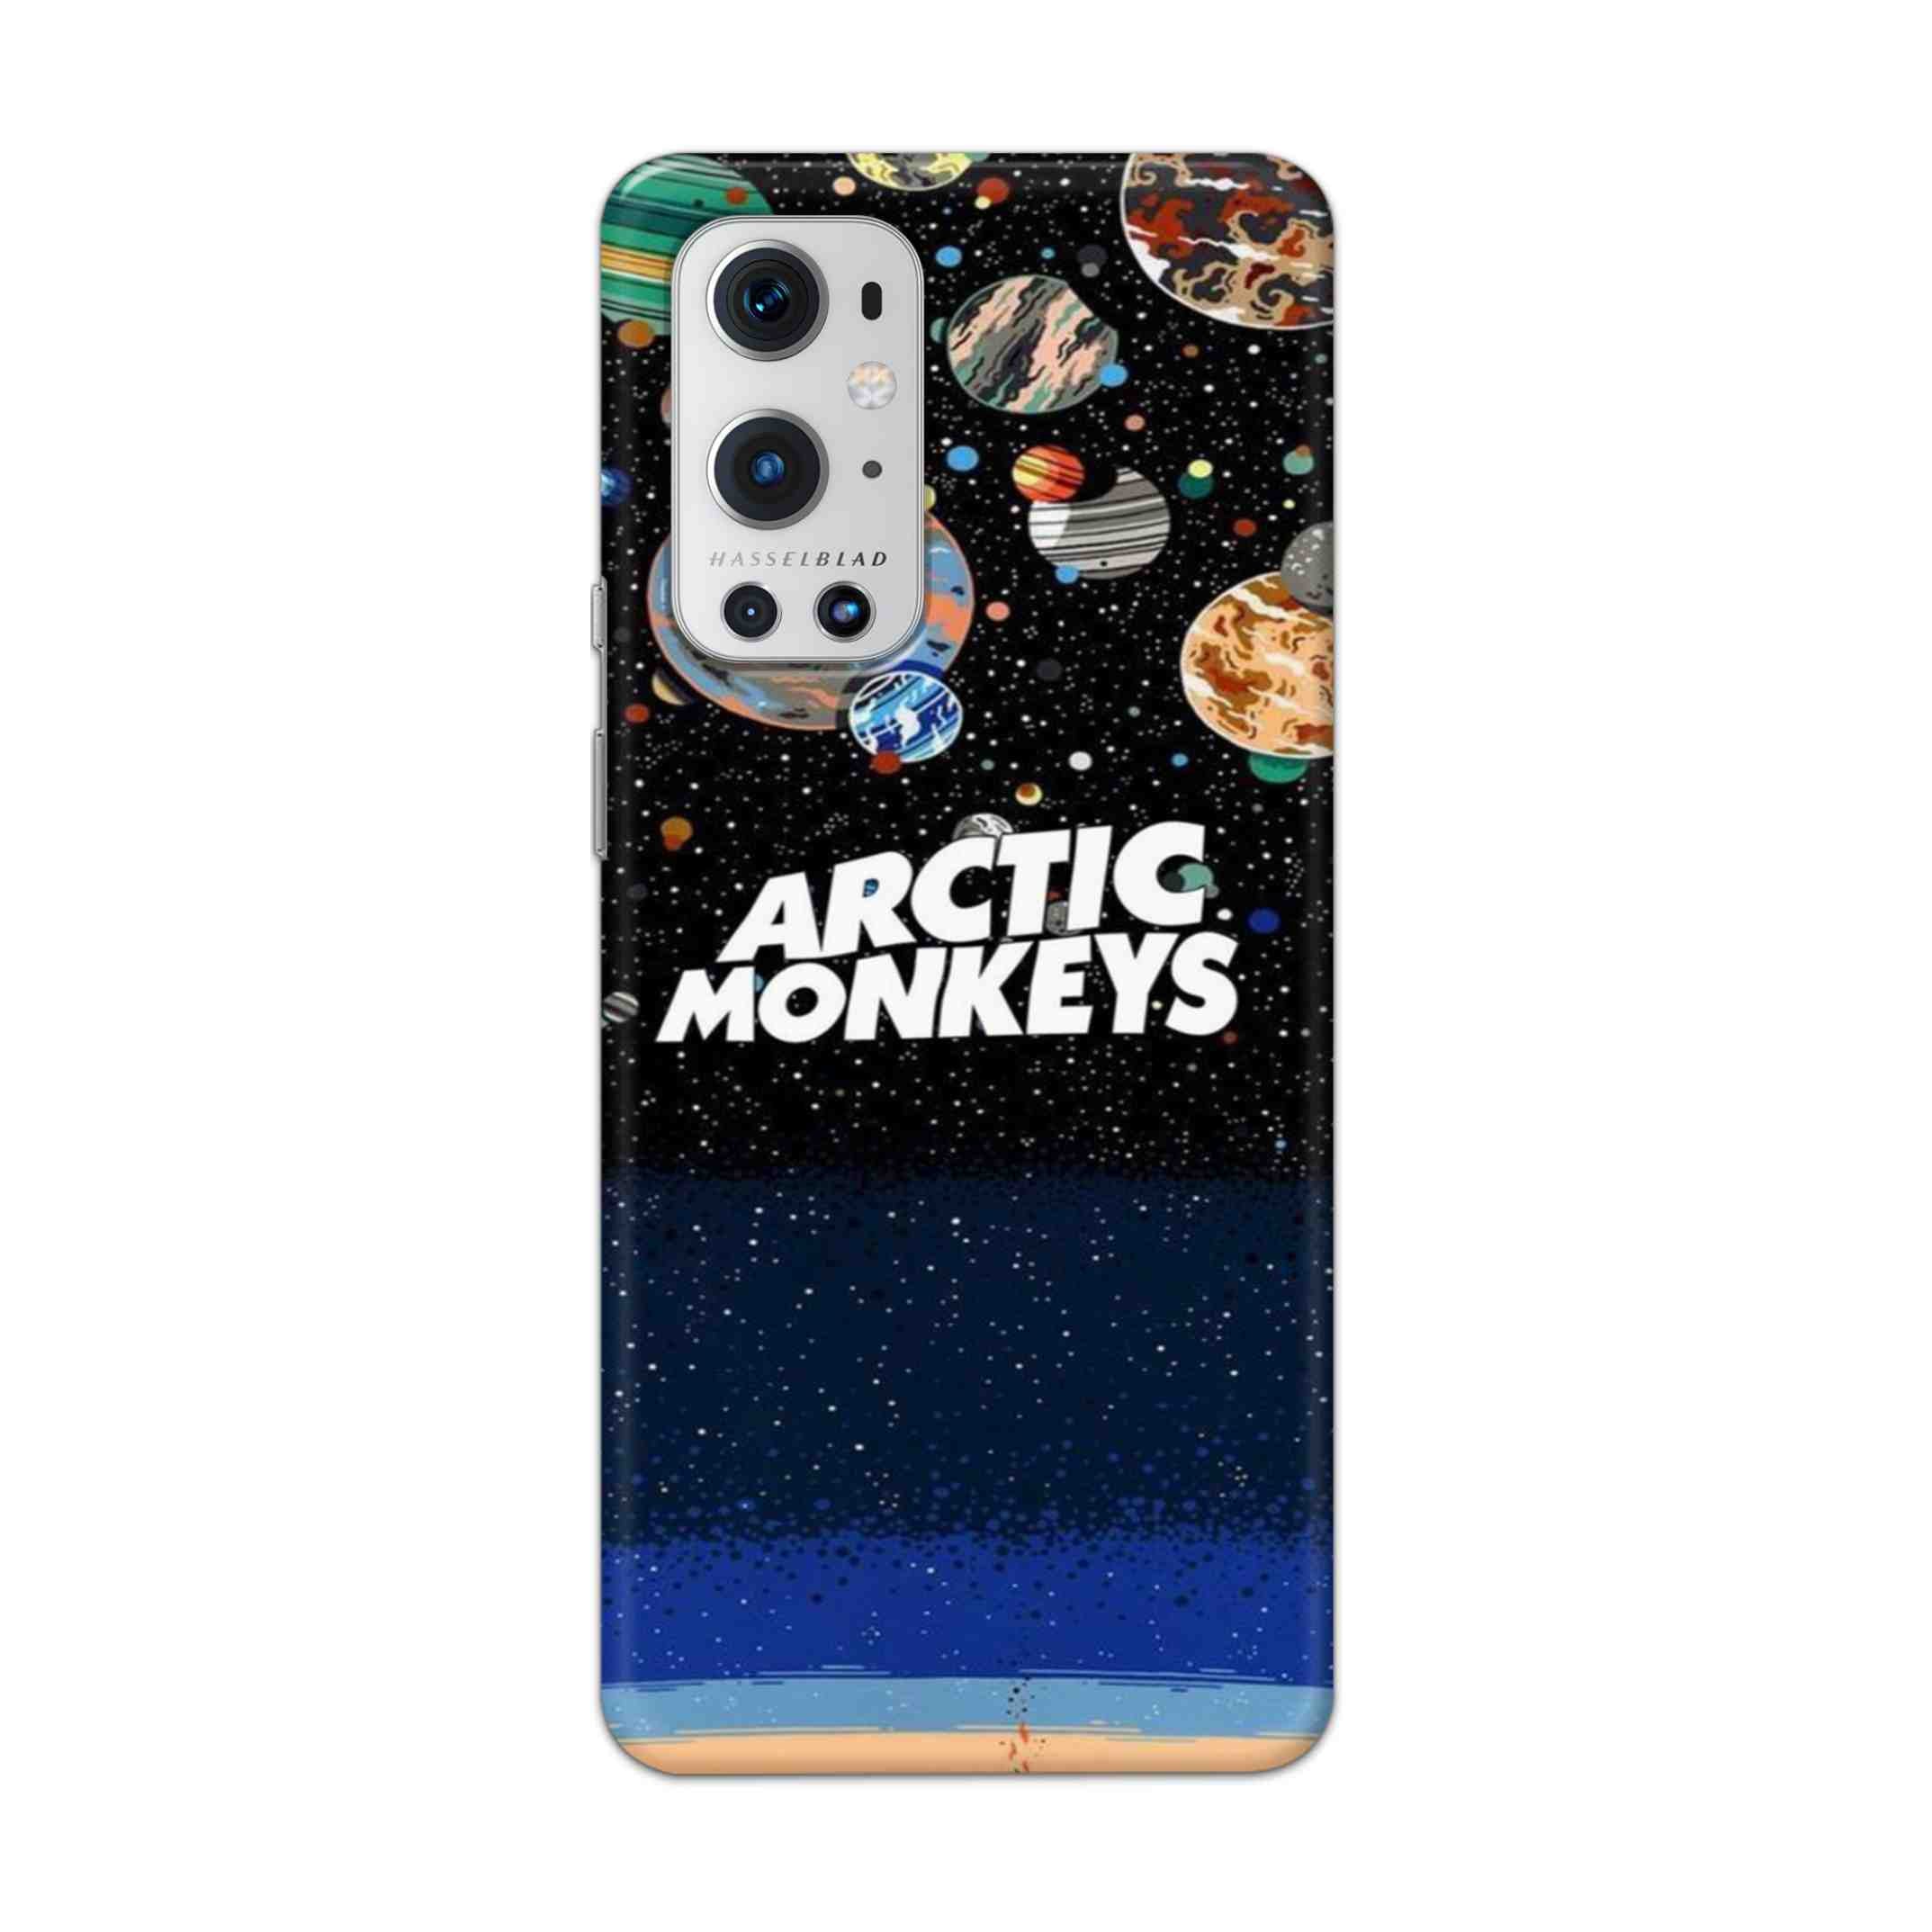 Buy Artic Monkeys Hard Back Mobile Phone Case Cover For OnePlus 9 Pro Online